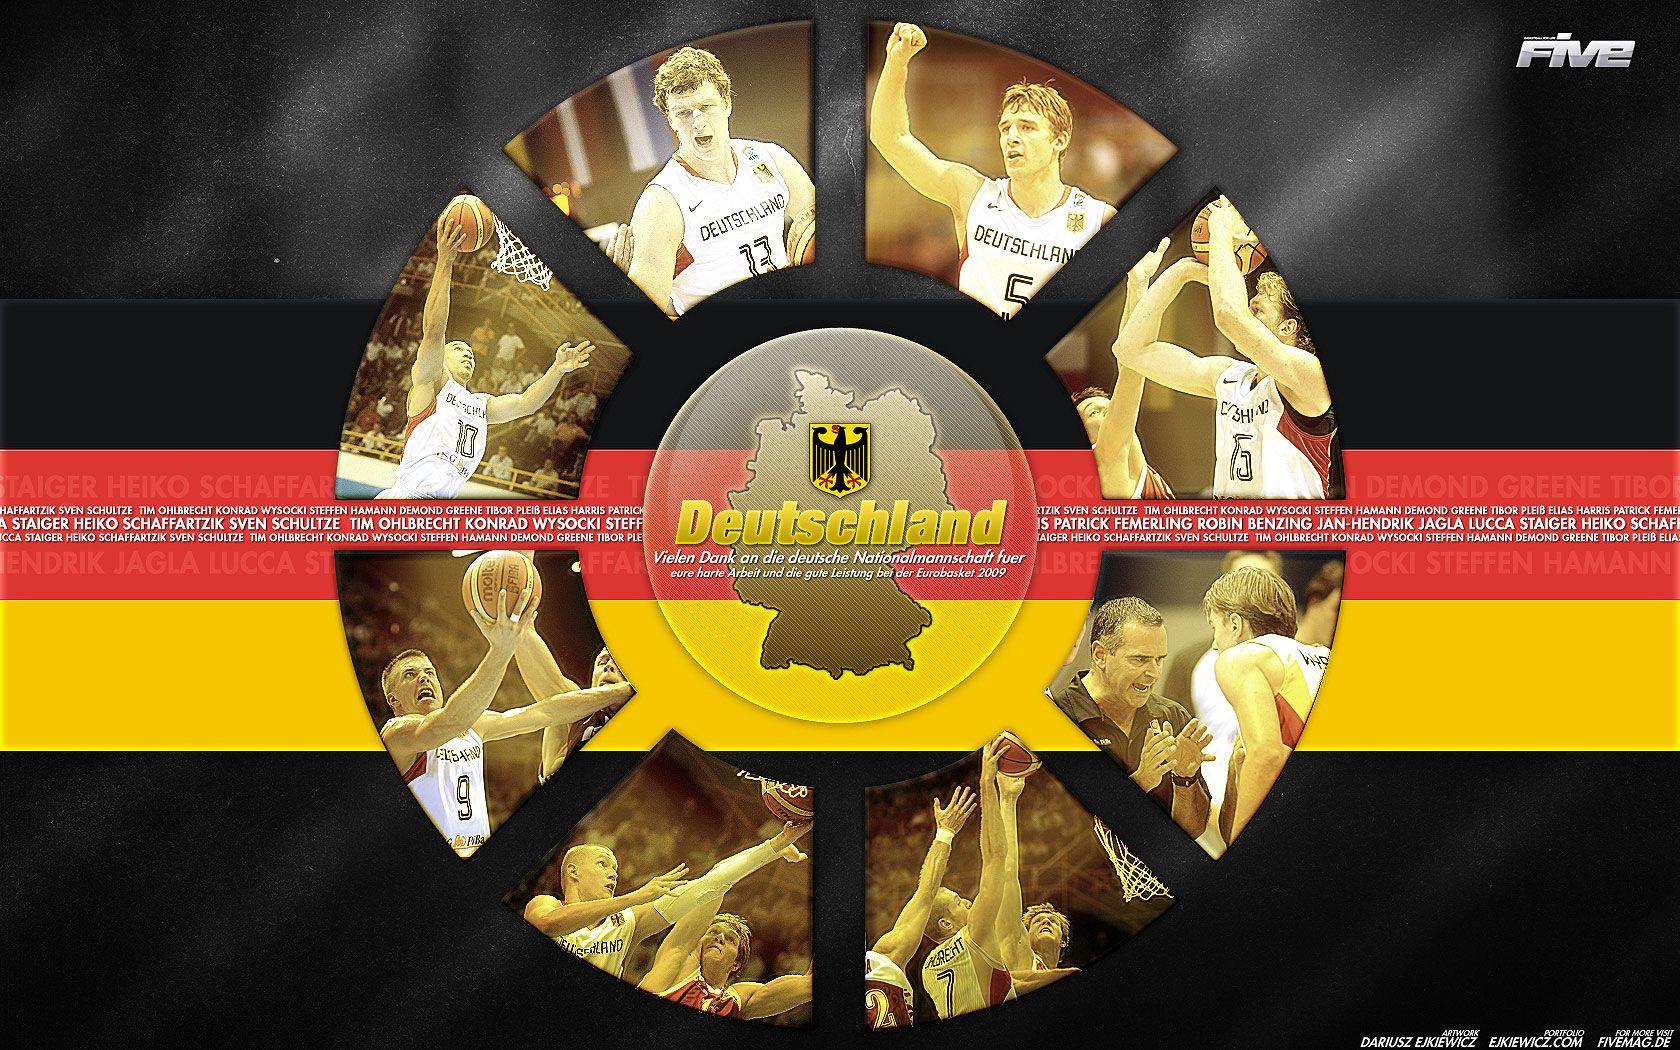 Germany National Team Members Widescreen Wallpaper. Basketball